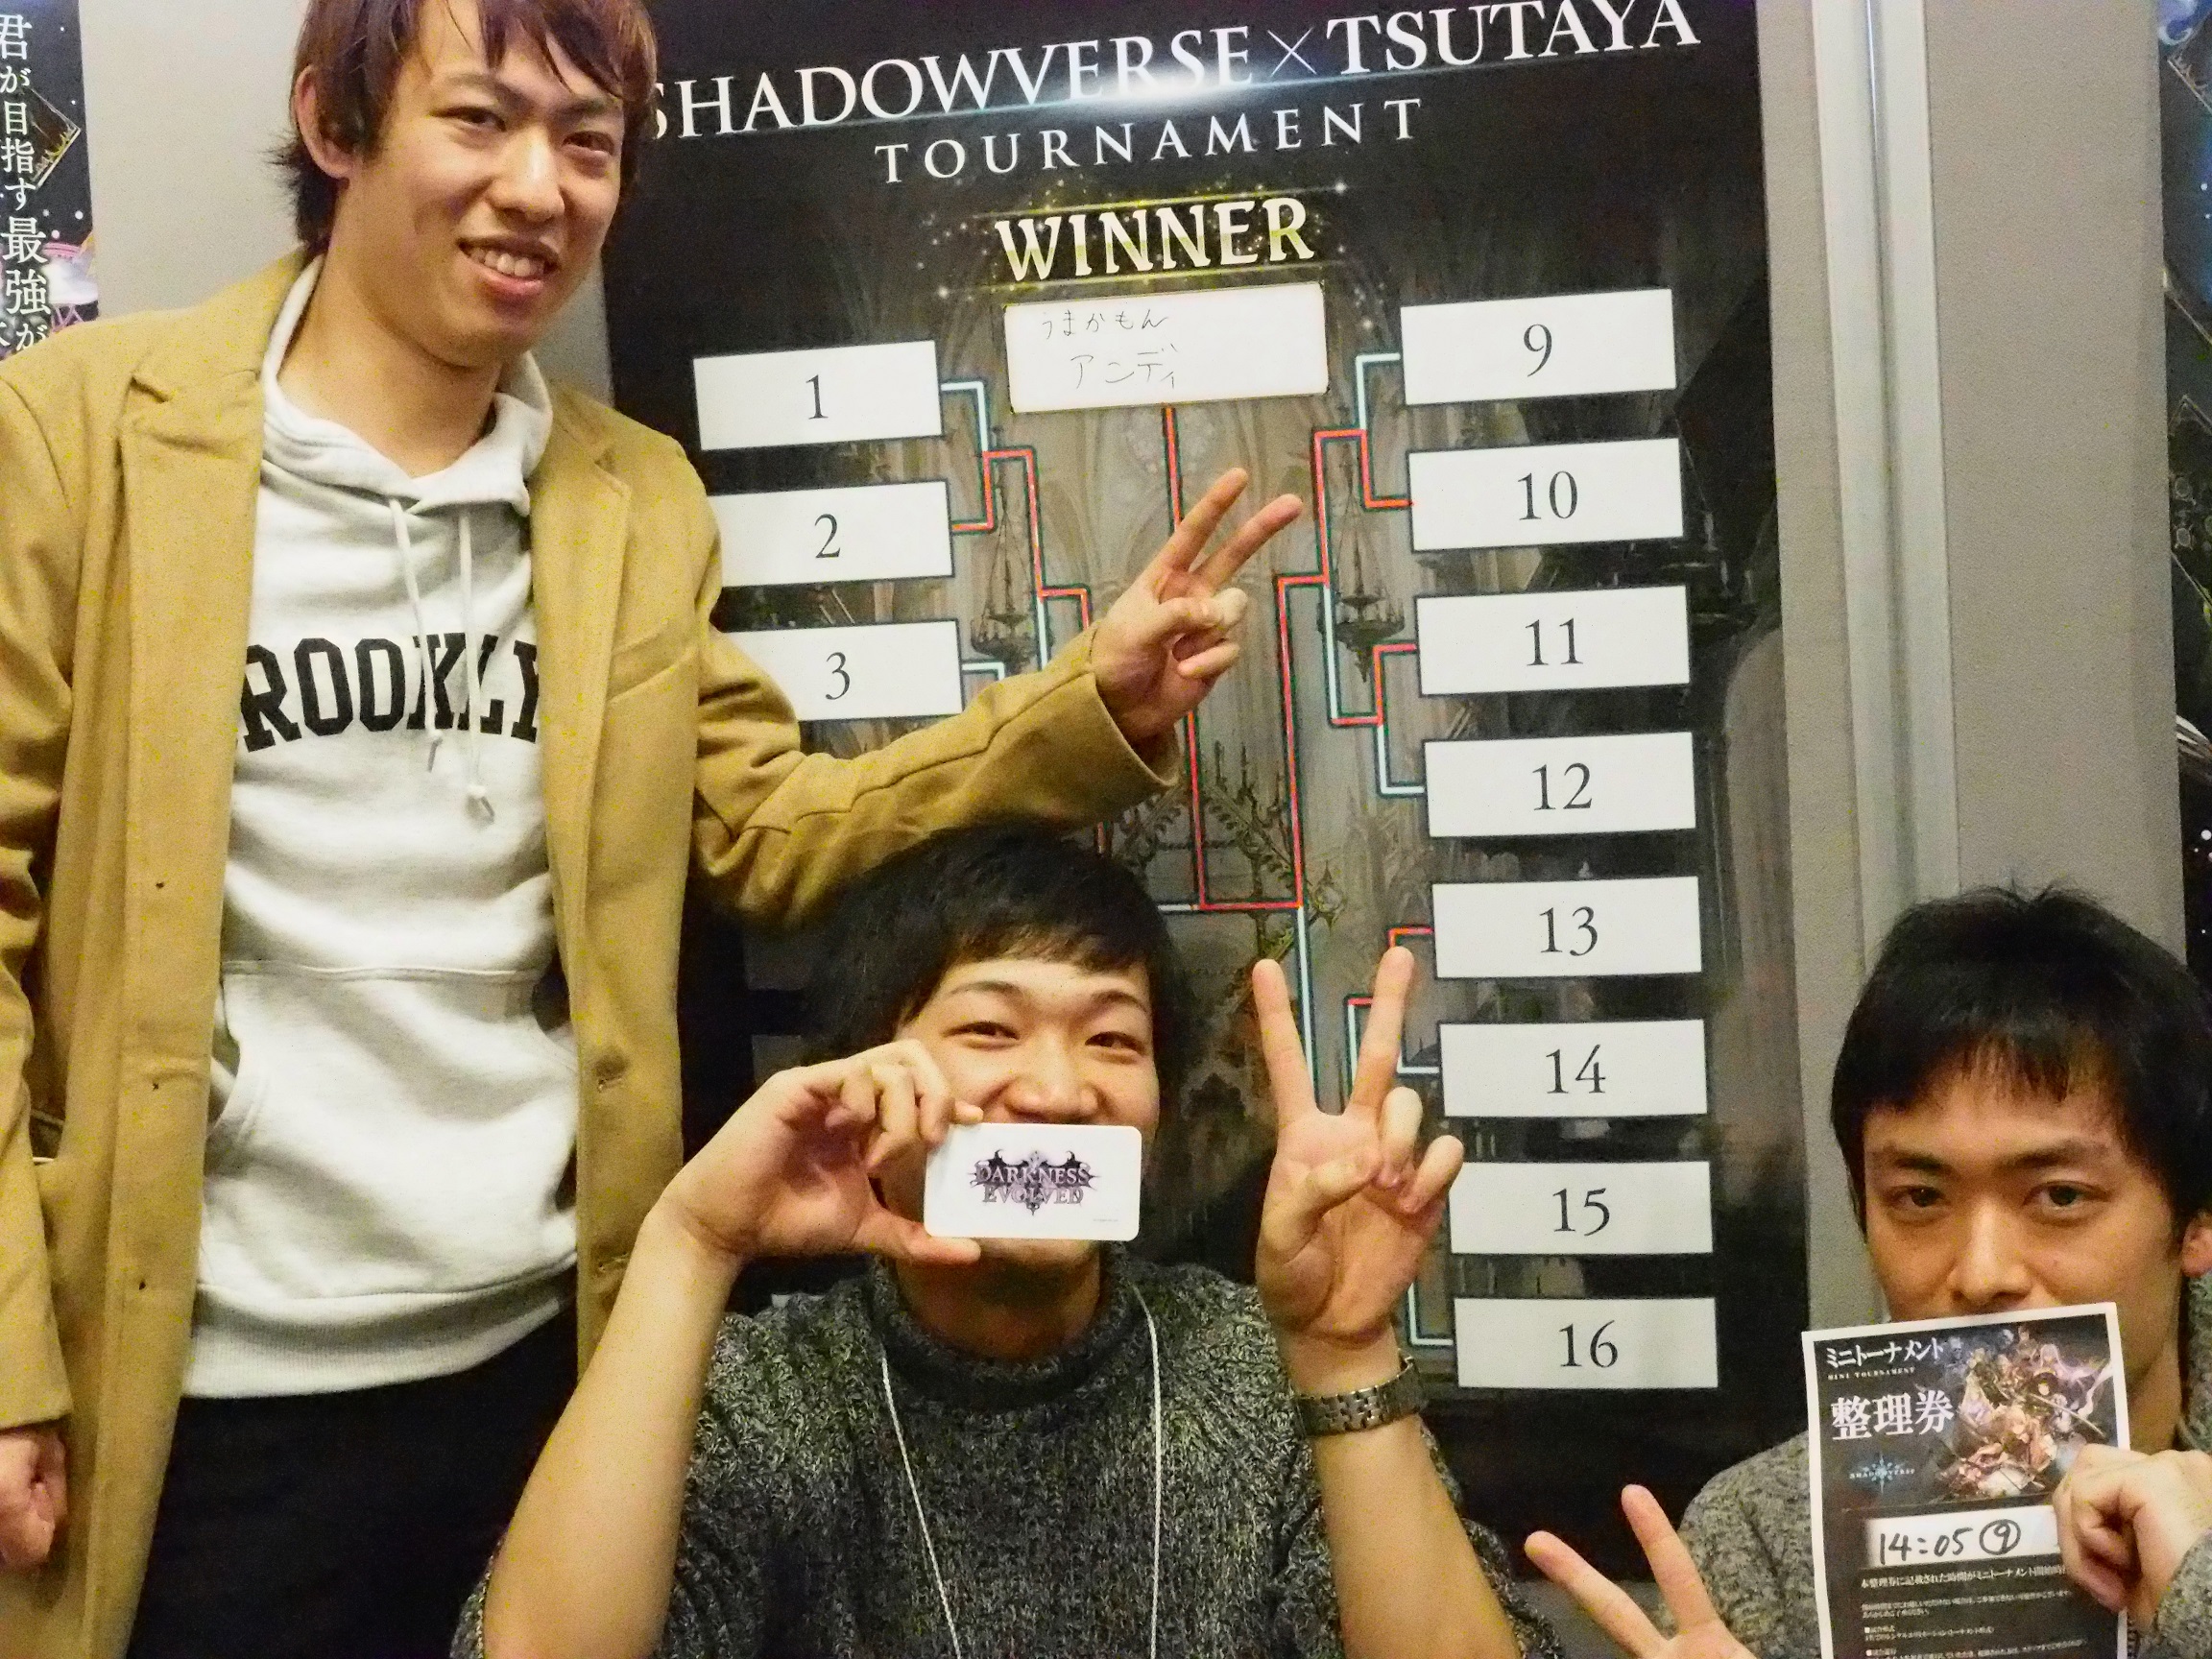 Shadowverse Tsutaya 全国5都市トーナメント大会 イベントレポート Columun Shadowverse シャドウバース シャドバ 公式サイト Cygames